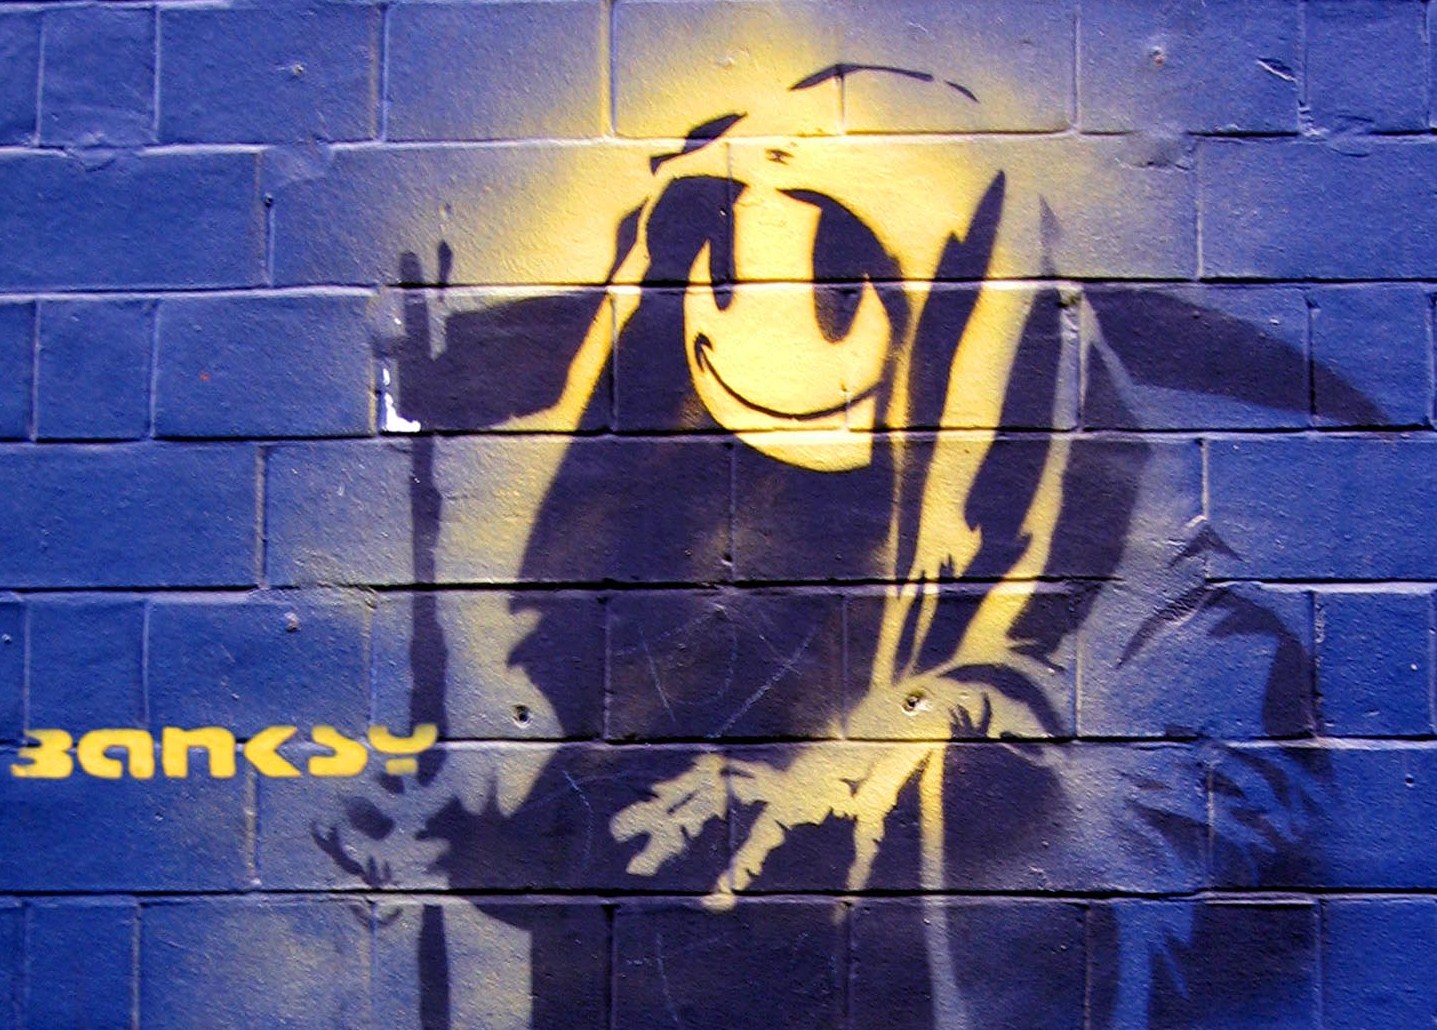 The Banksy Blog: The Death of Graffiti Artist Banksy